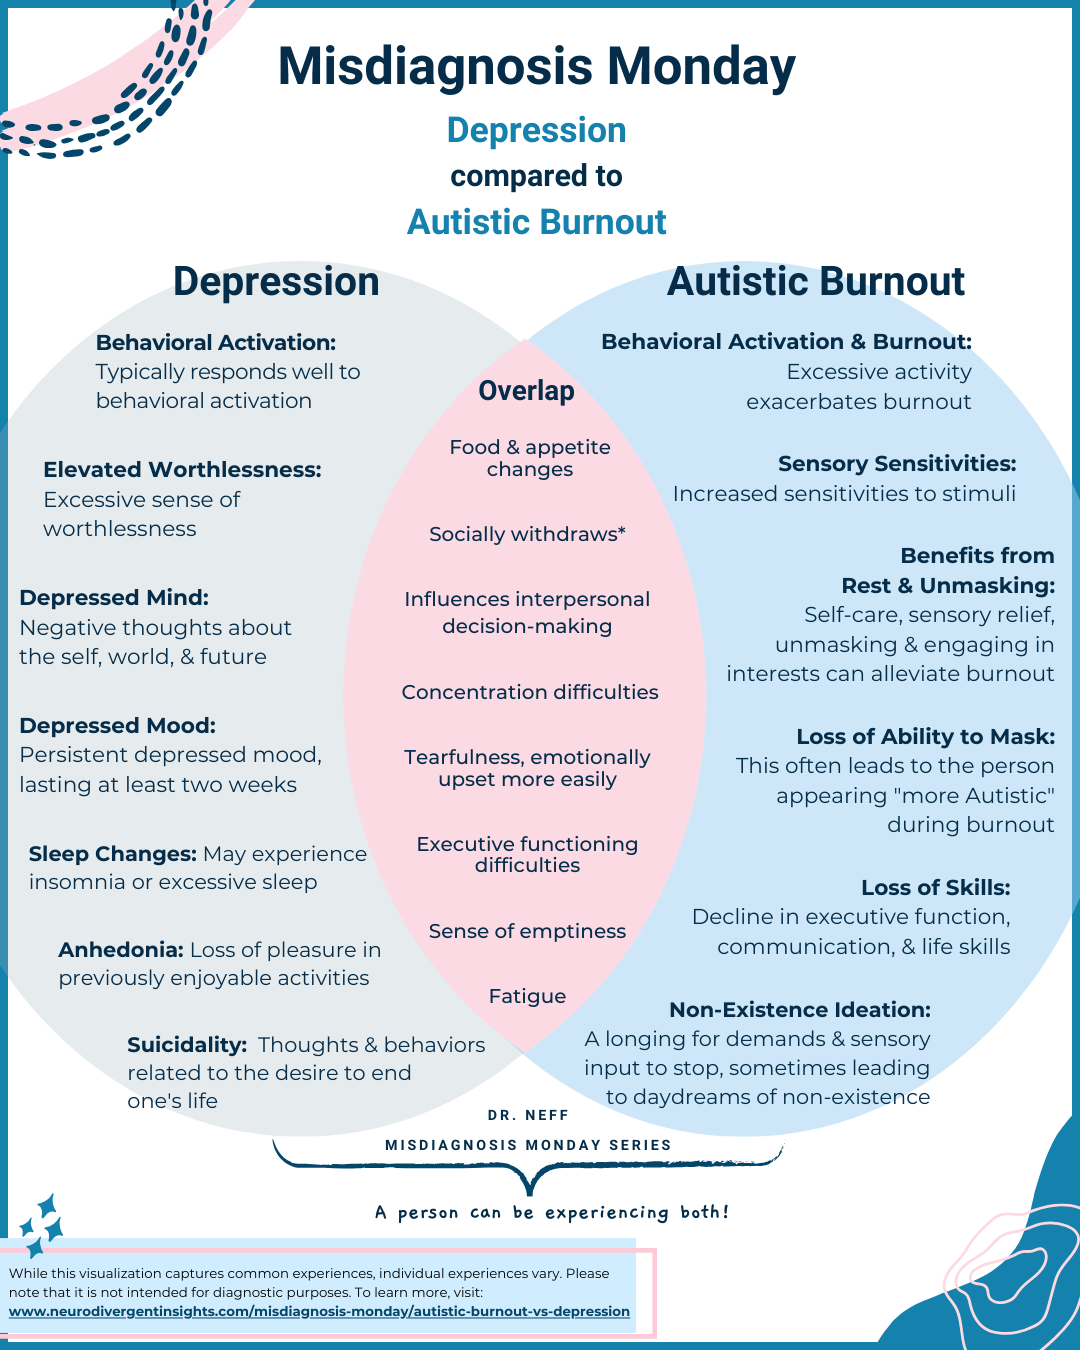 Autistic Burnout vs Depression